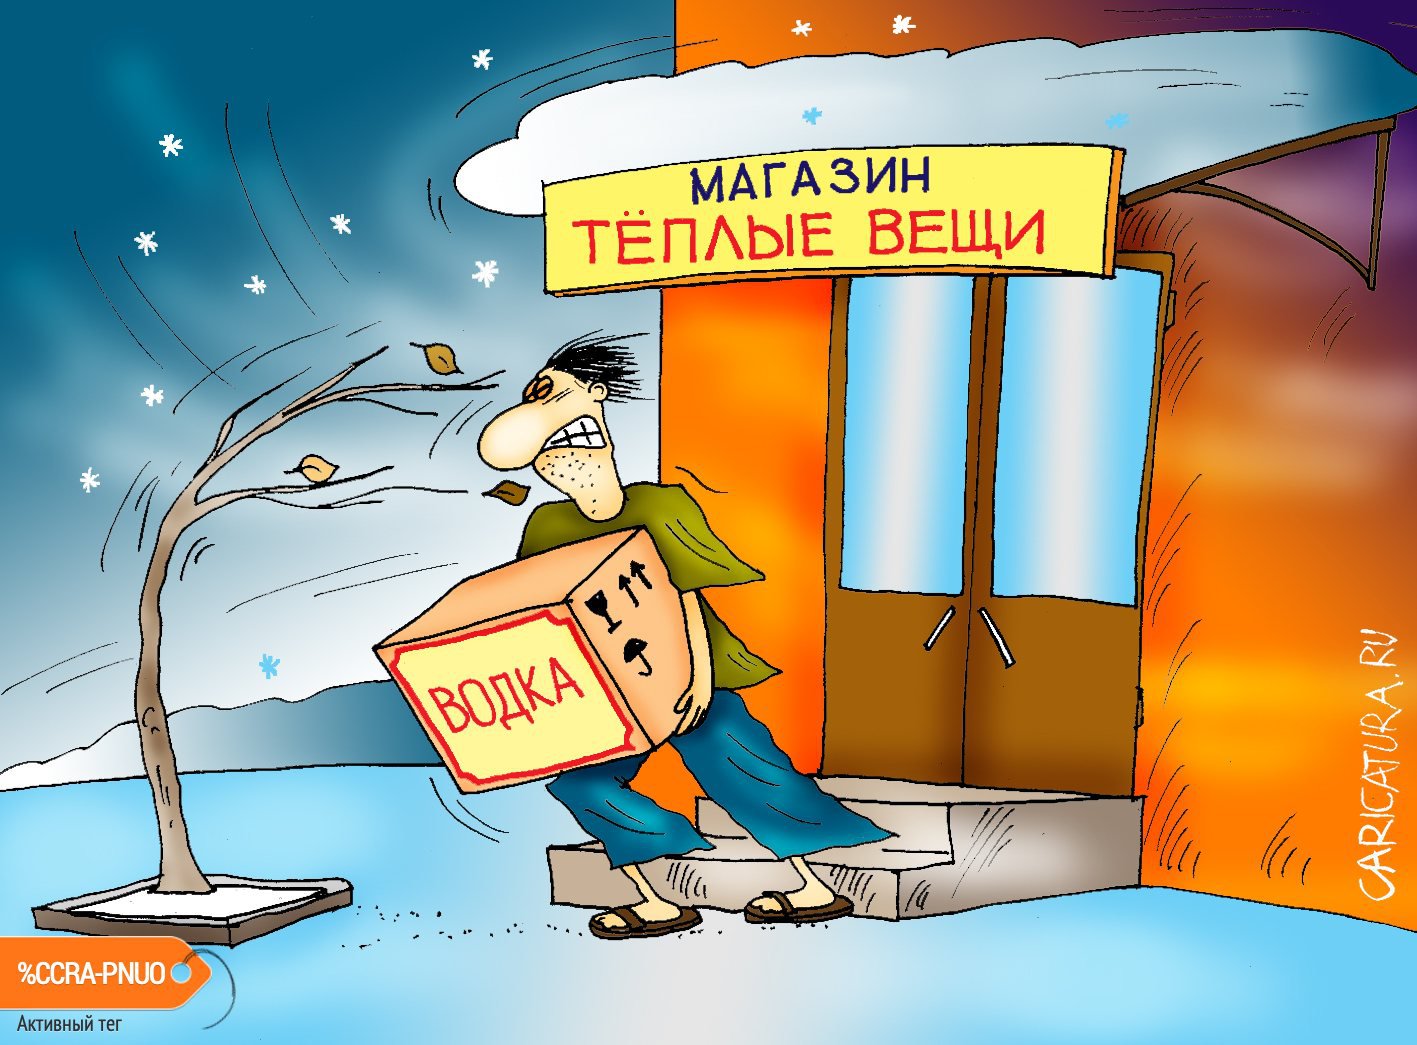 Карикатура "Теплые вещи", Алексей Булатов